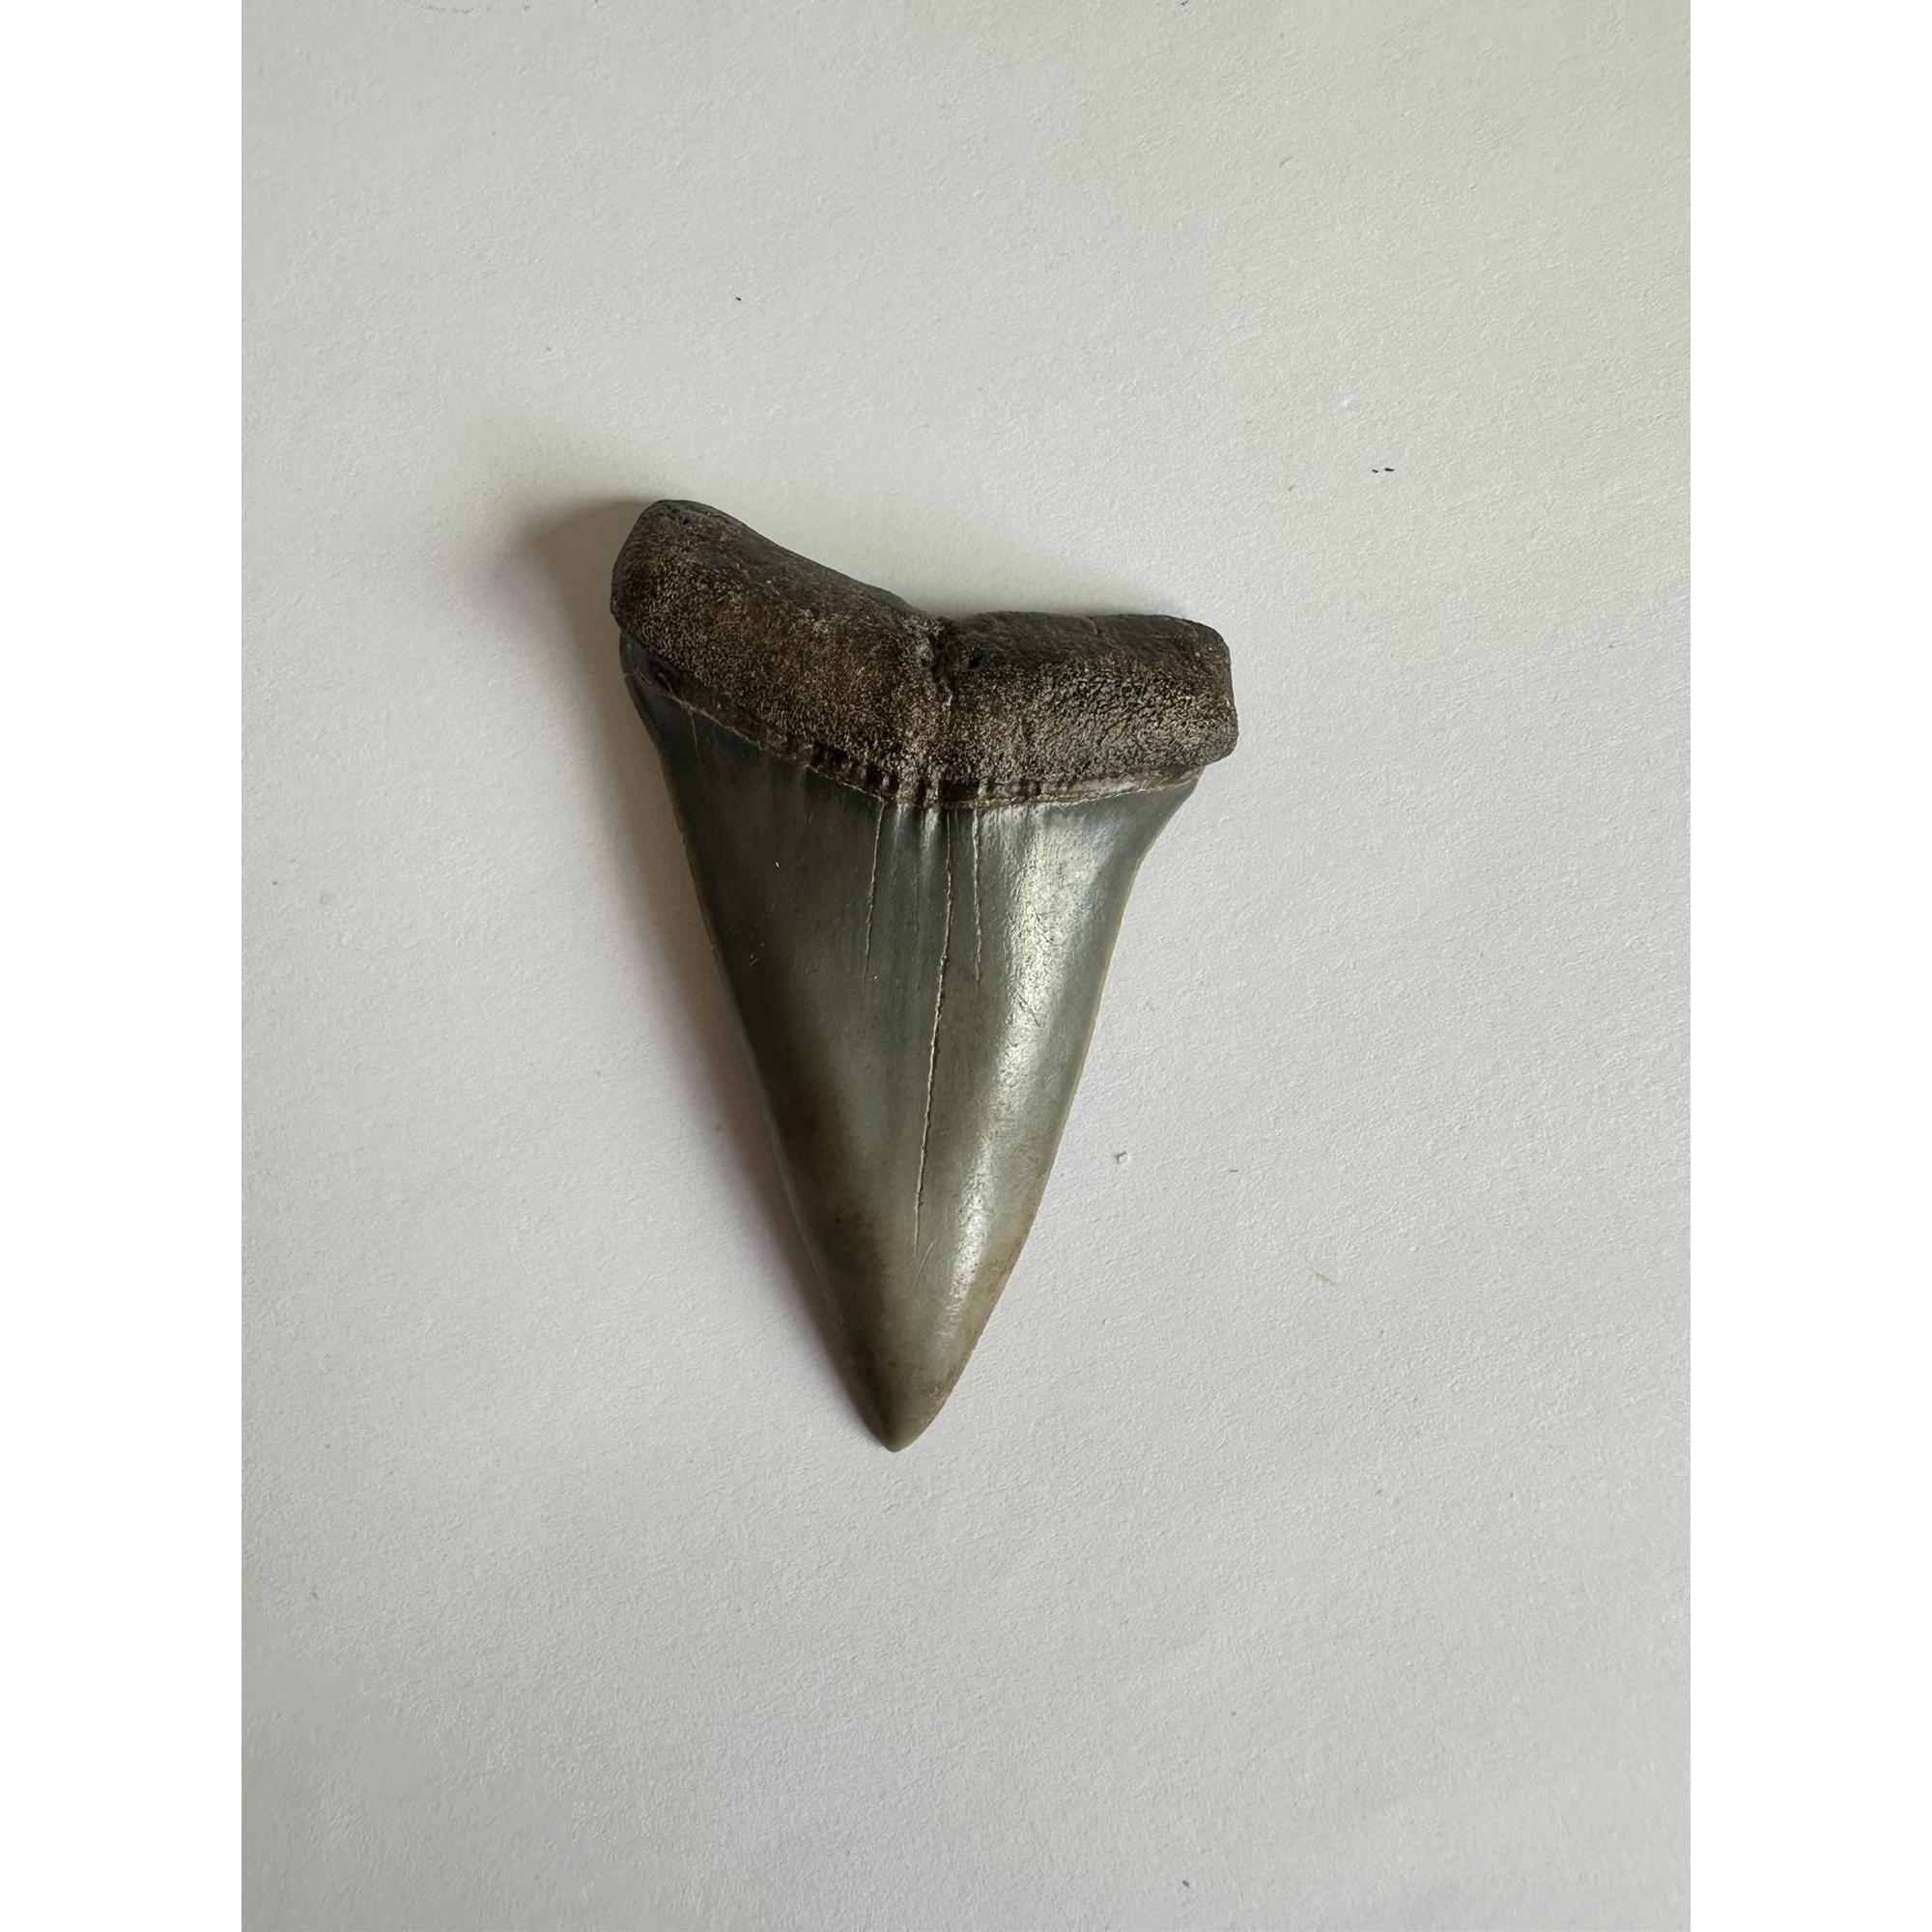 Mako Shark Tooth, South Georgia Prehistoric Online